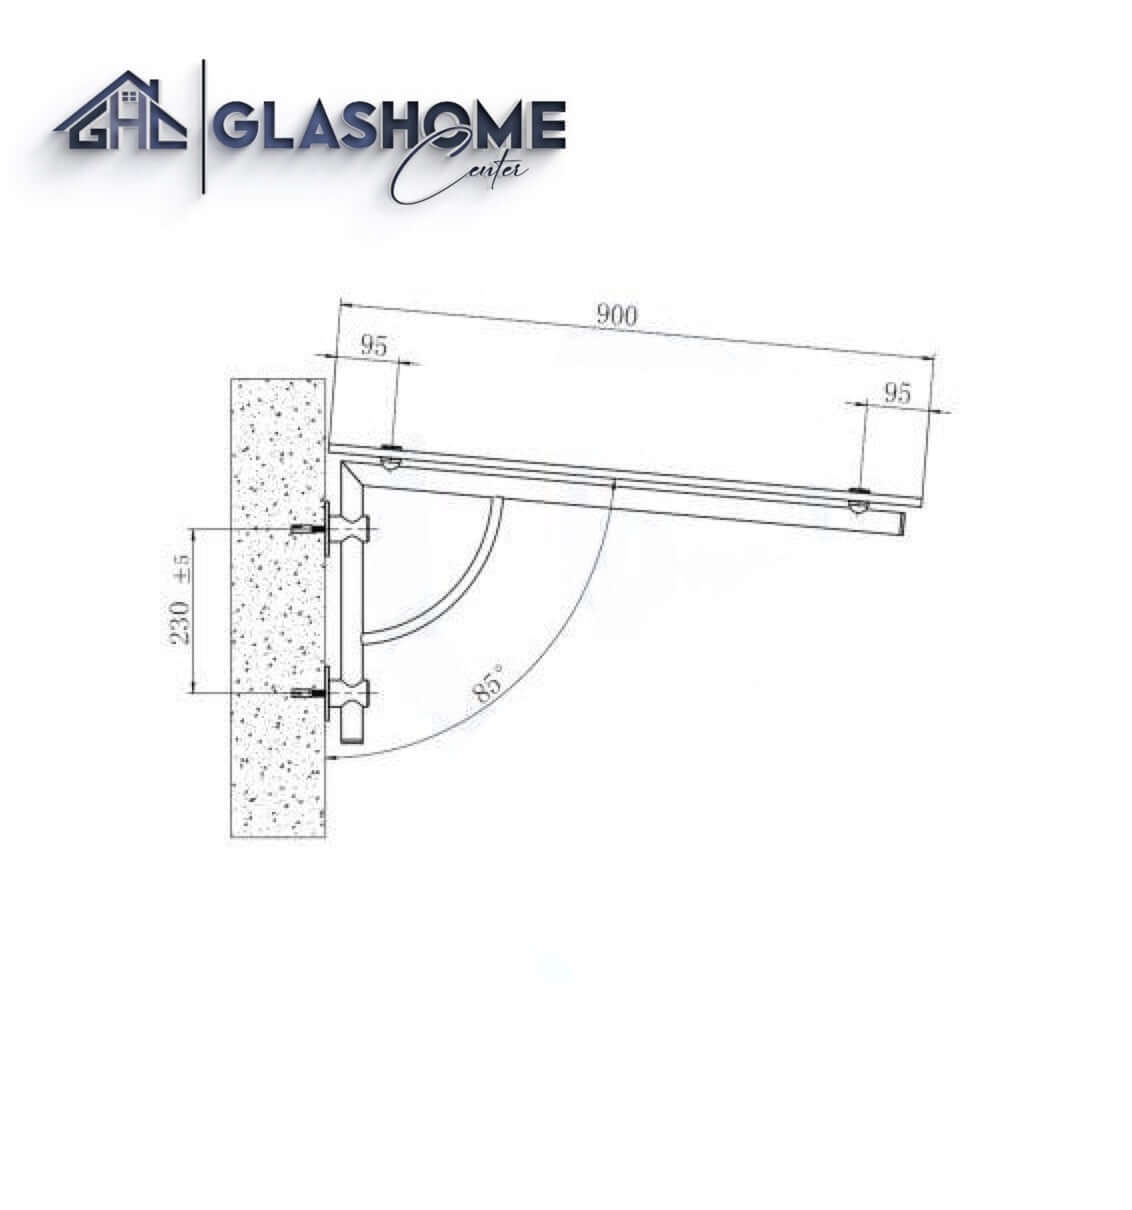 GlasHomeCenter - glass canopy - Clear glass - 230x90cm - 13.1mm VSG - incl. 3 Edelstahlhalterungen Variant "Athens"